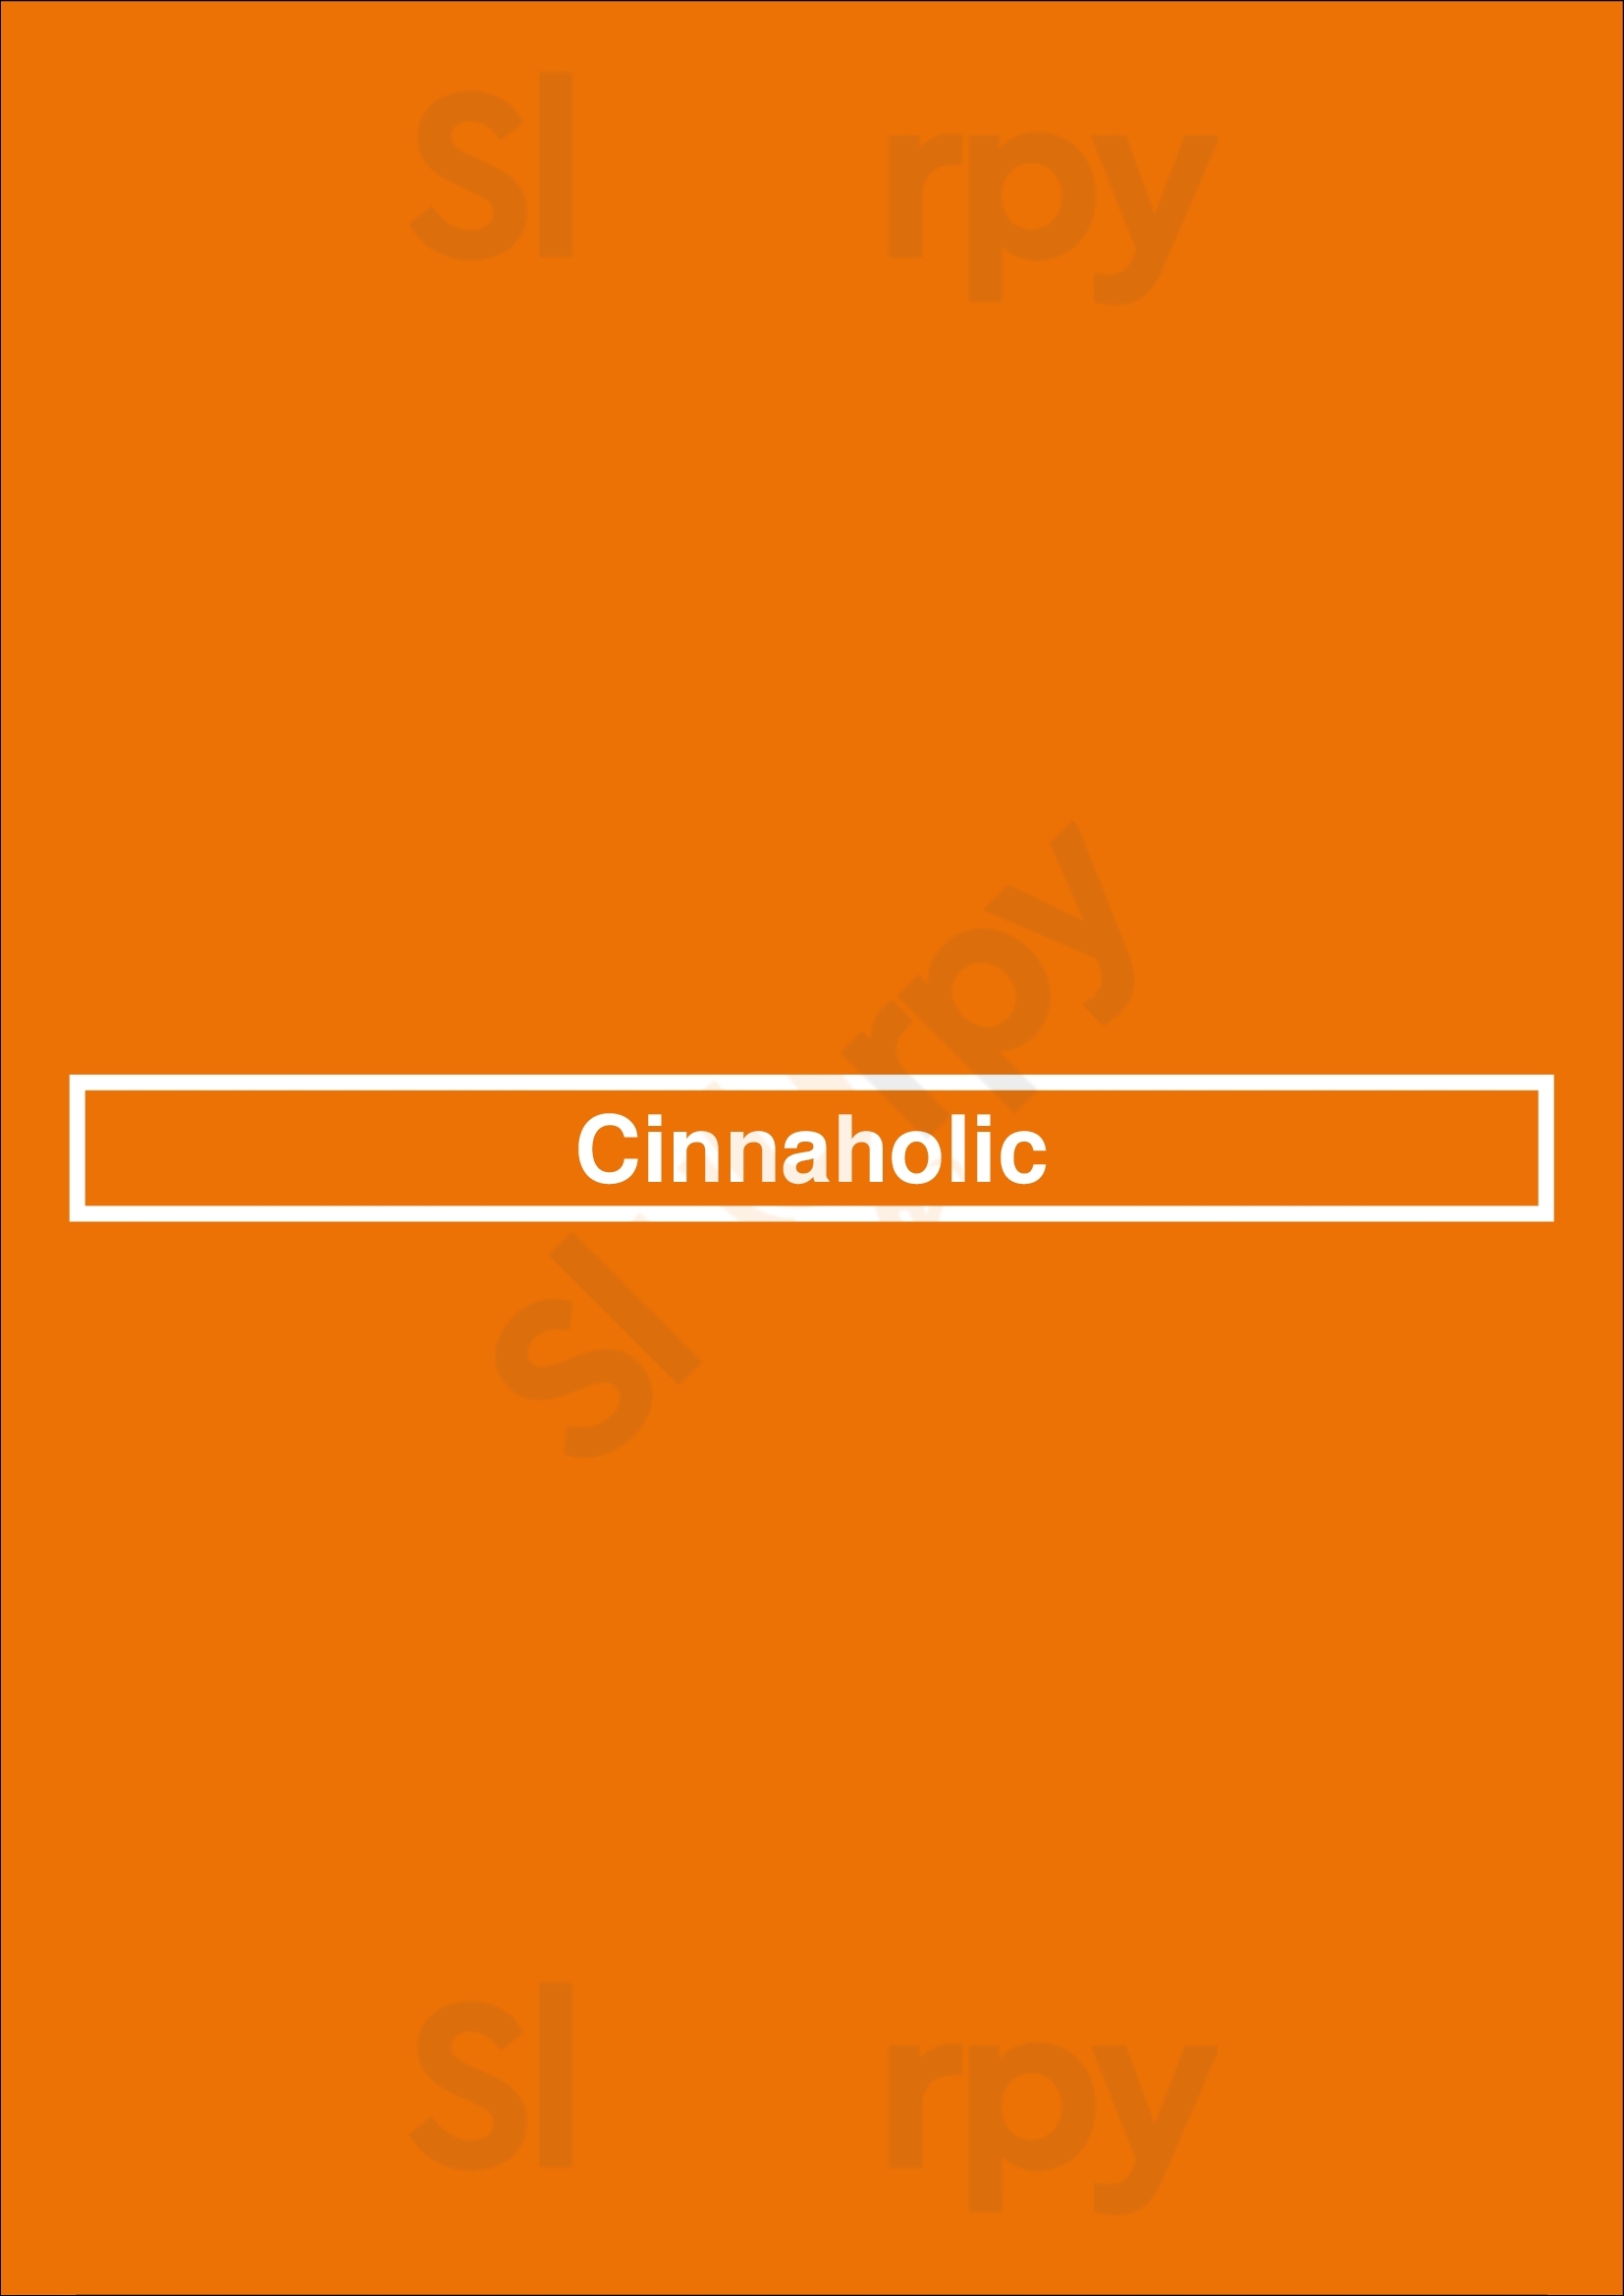 Cinnaholic Los Angeles Menu - 1